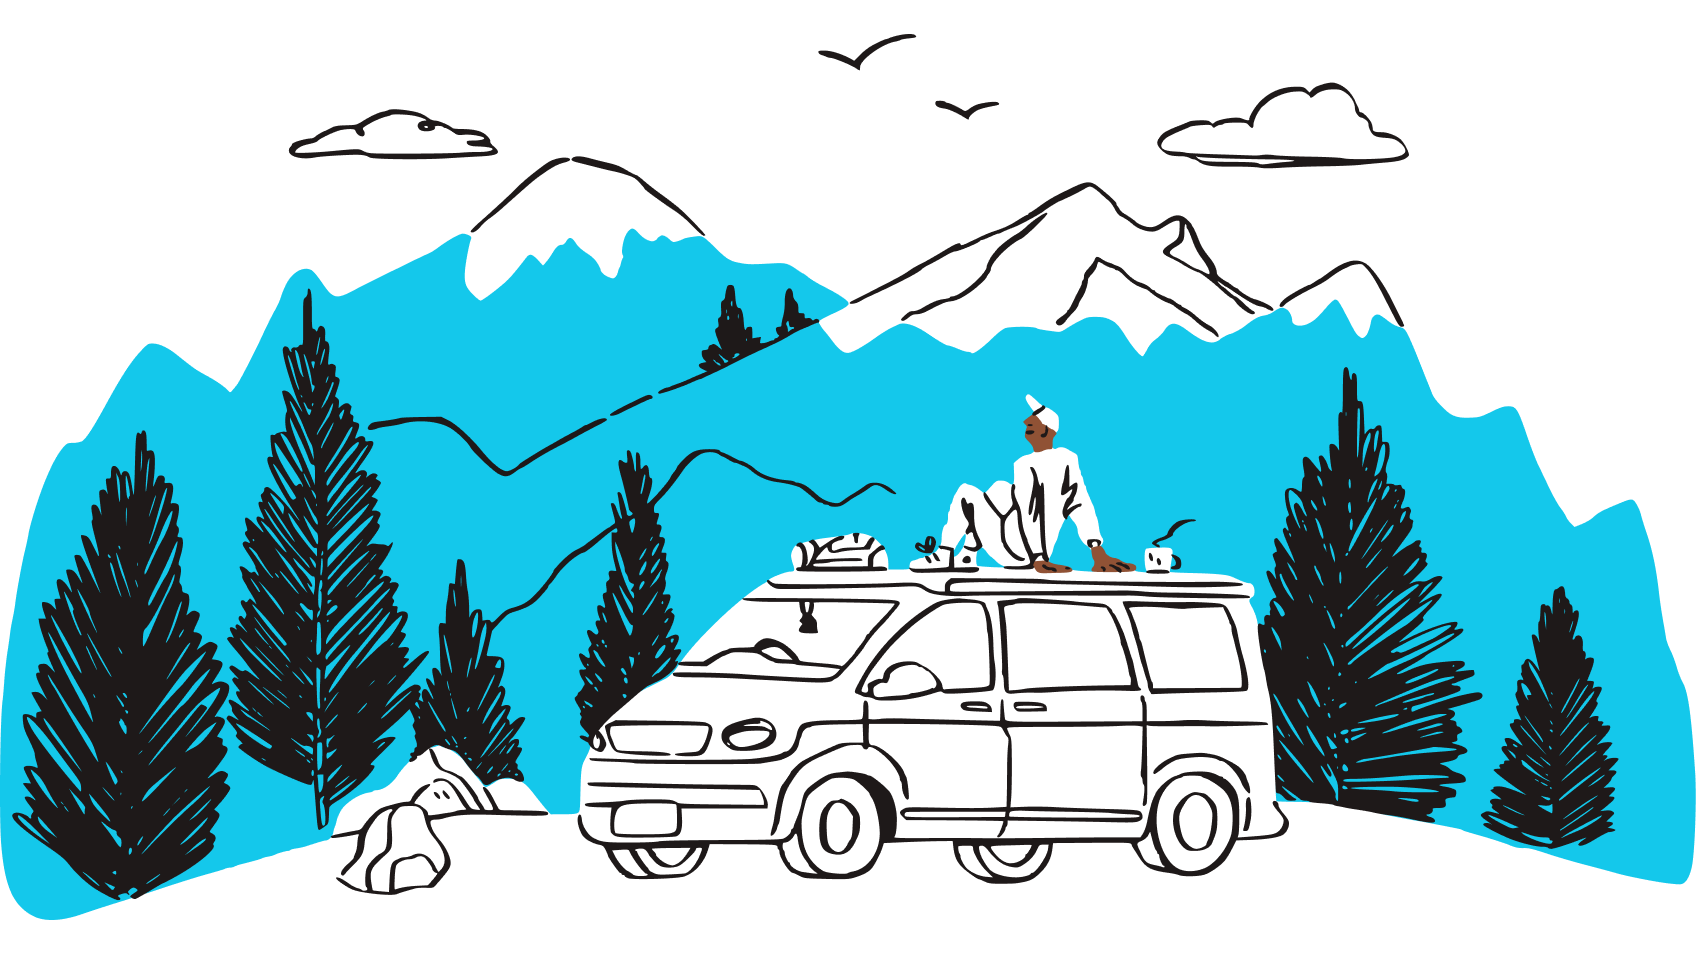 Ilustrasi seseorang duduk di atas bumbung sebuah kenderaan, mengagumi pemandangan banjaran gunung.